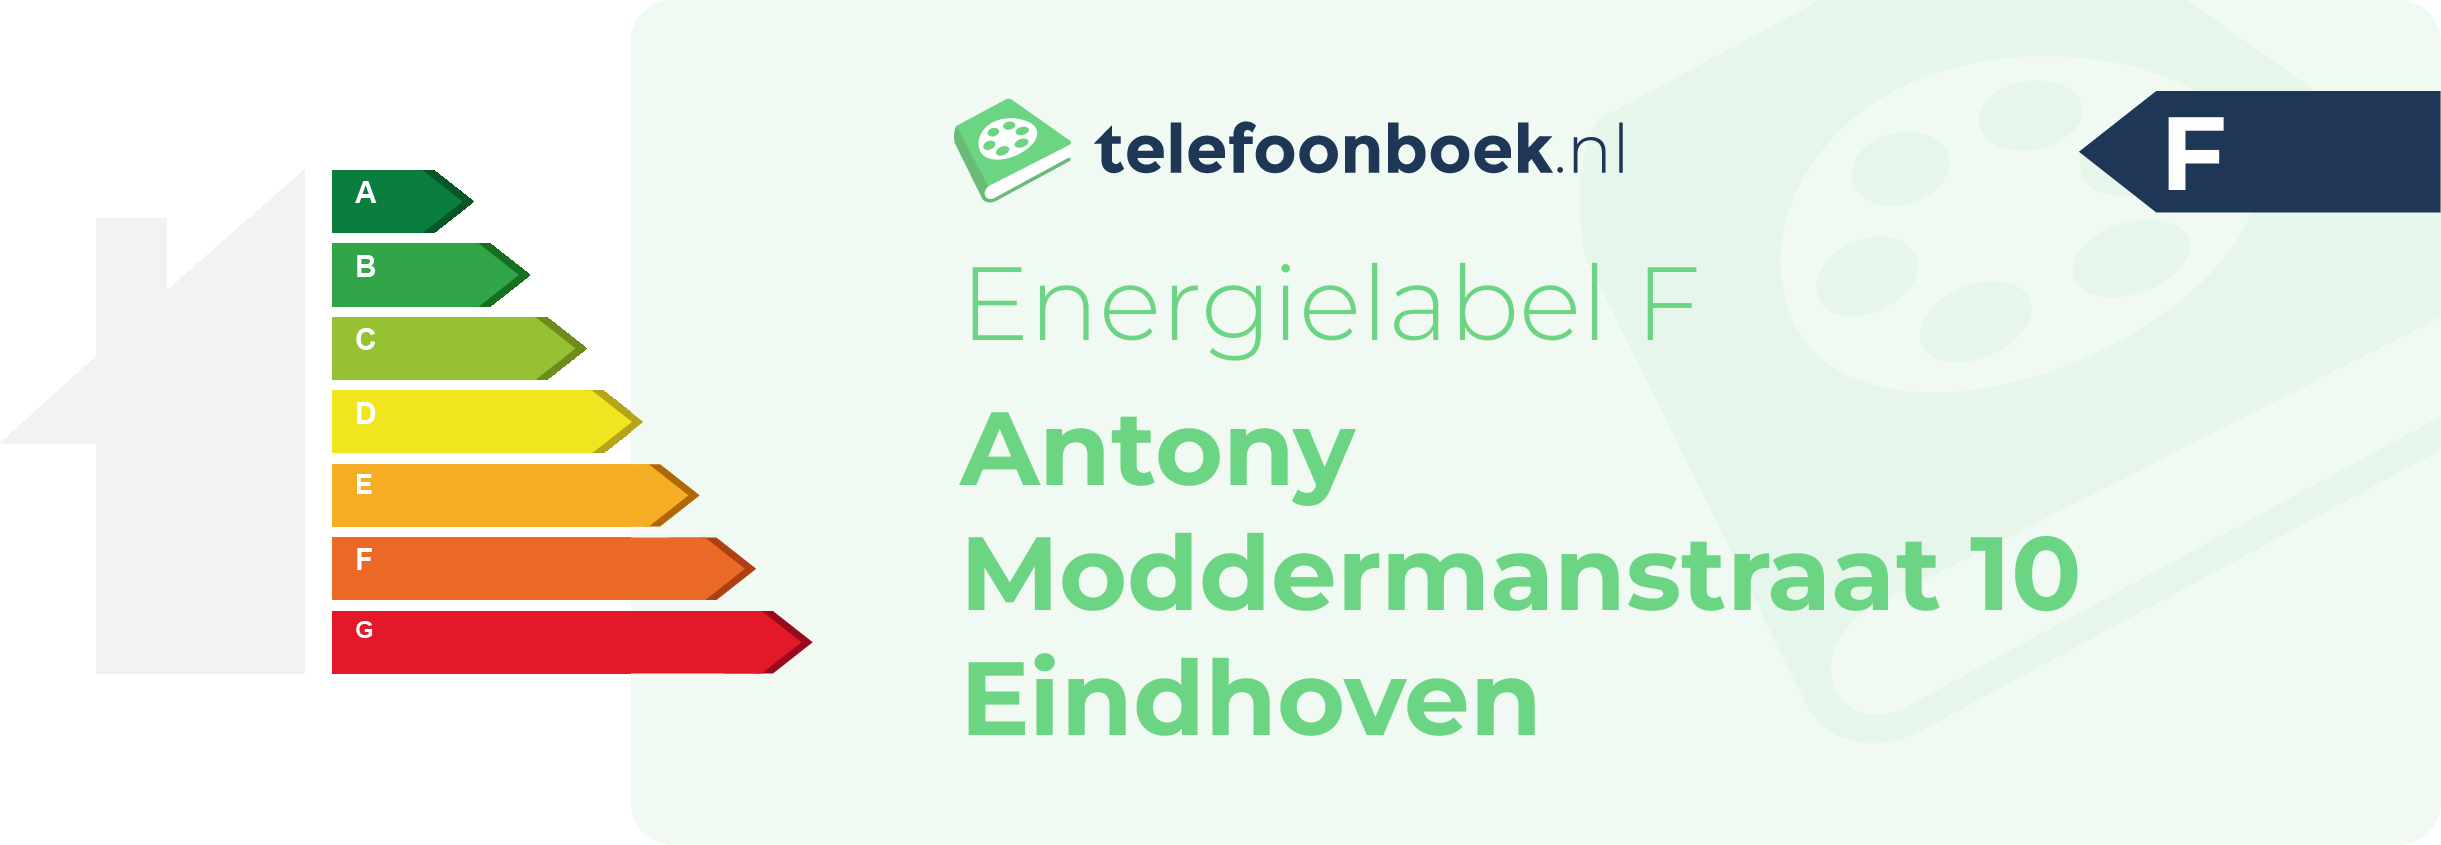 Energielabel Antony Moddermanstraat 10 Eindhoven